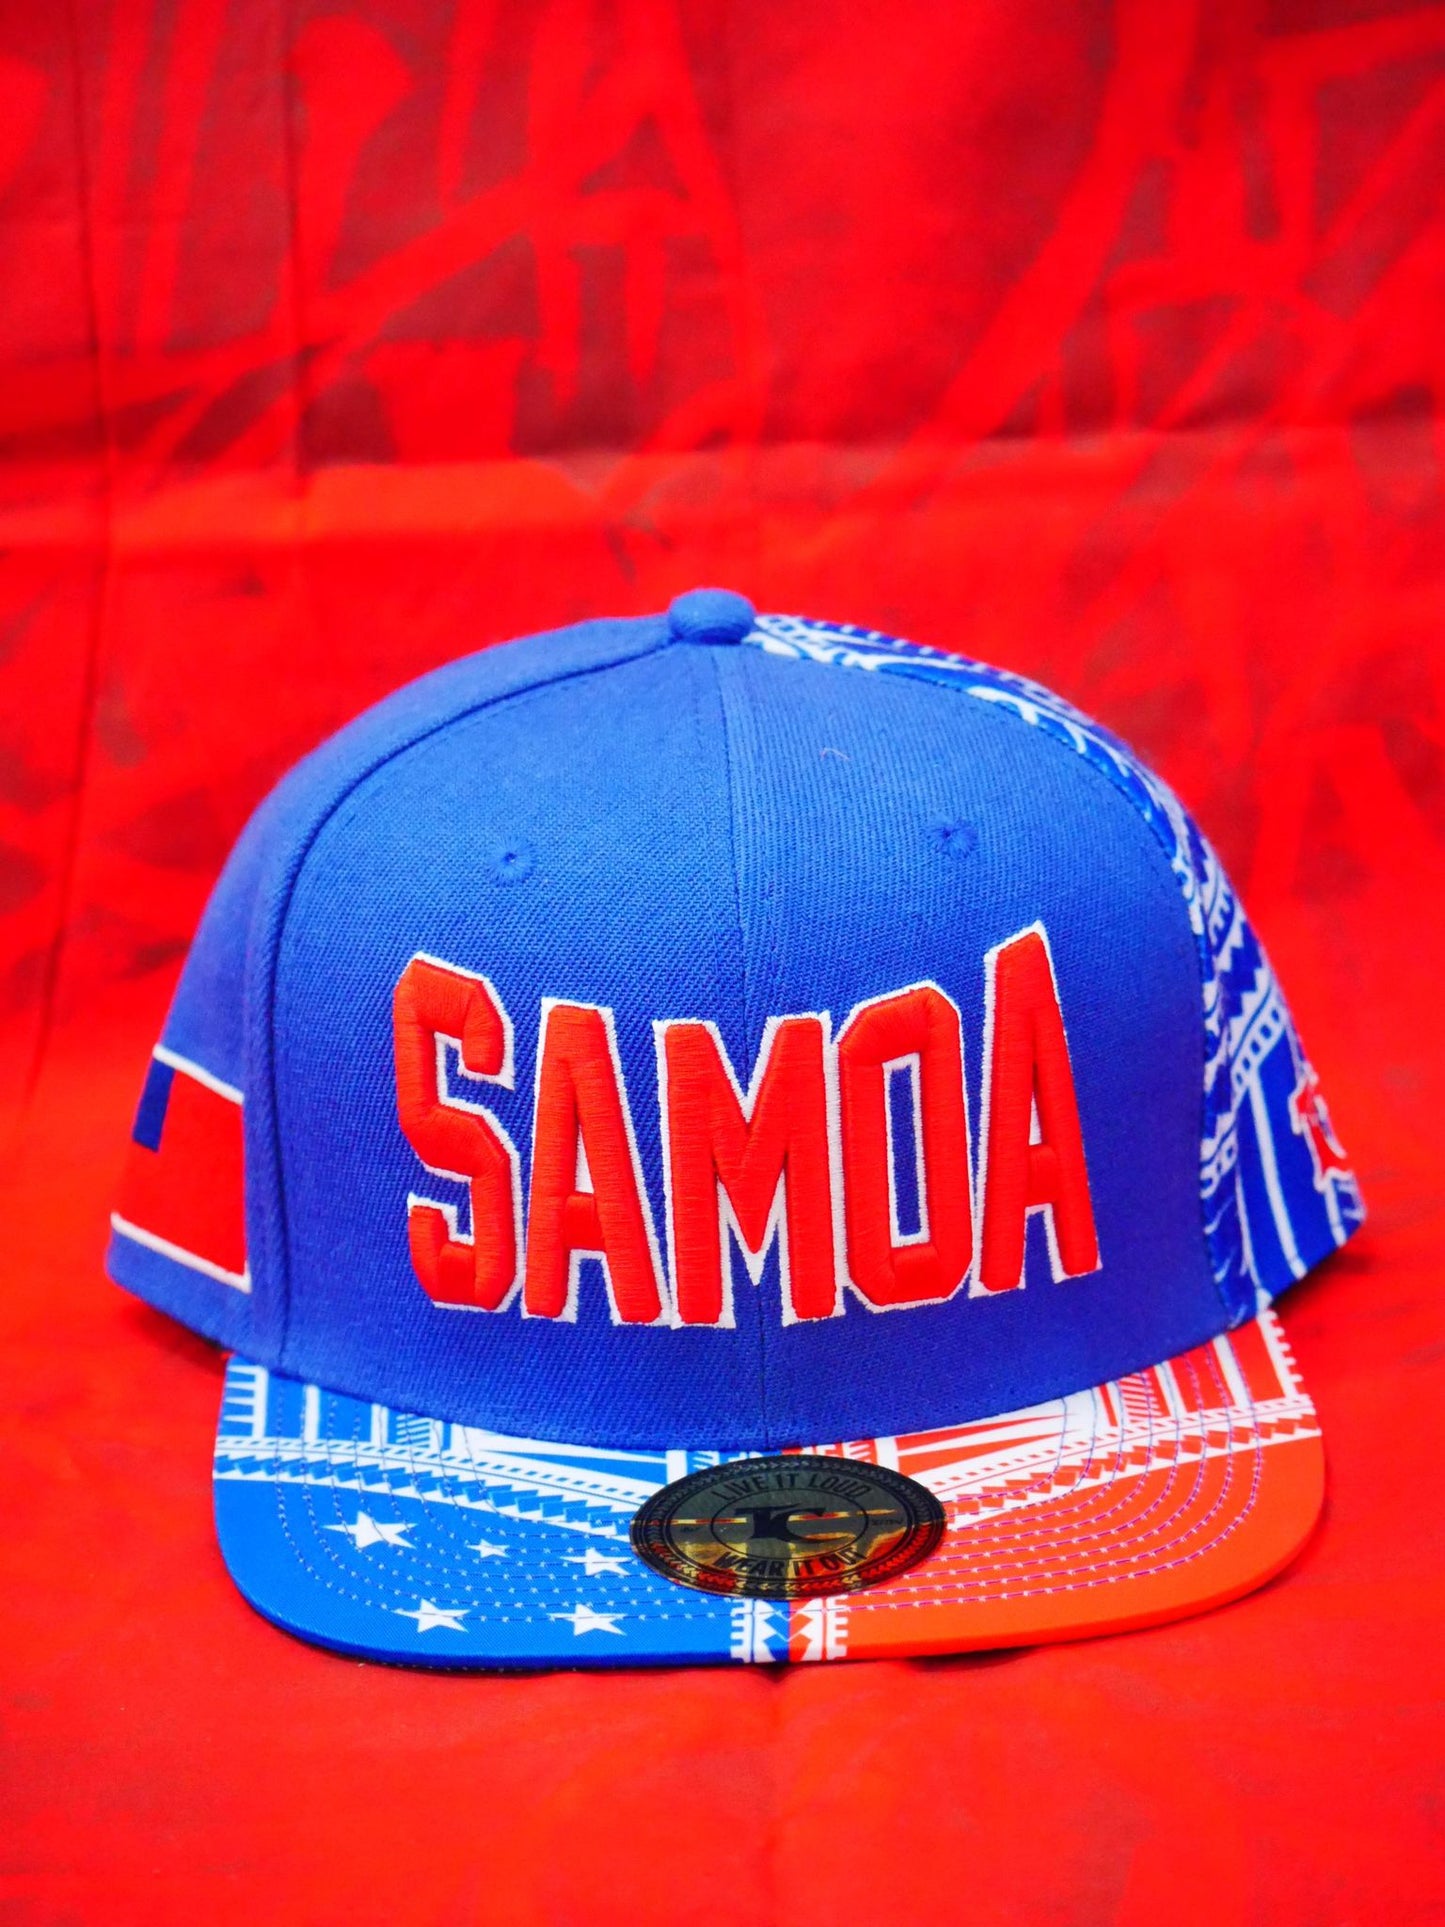 Tuff Coconut's "Samoa" Snapback Blue with Red